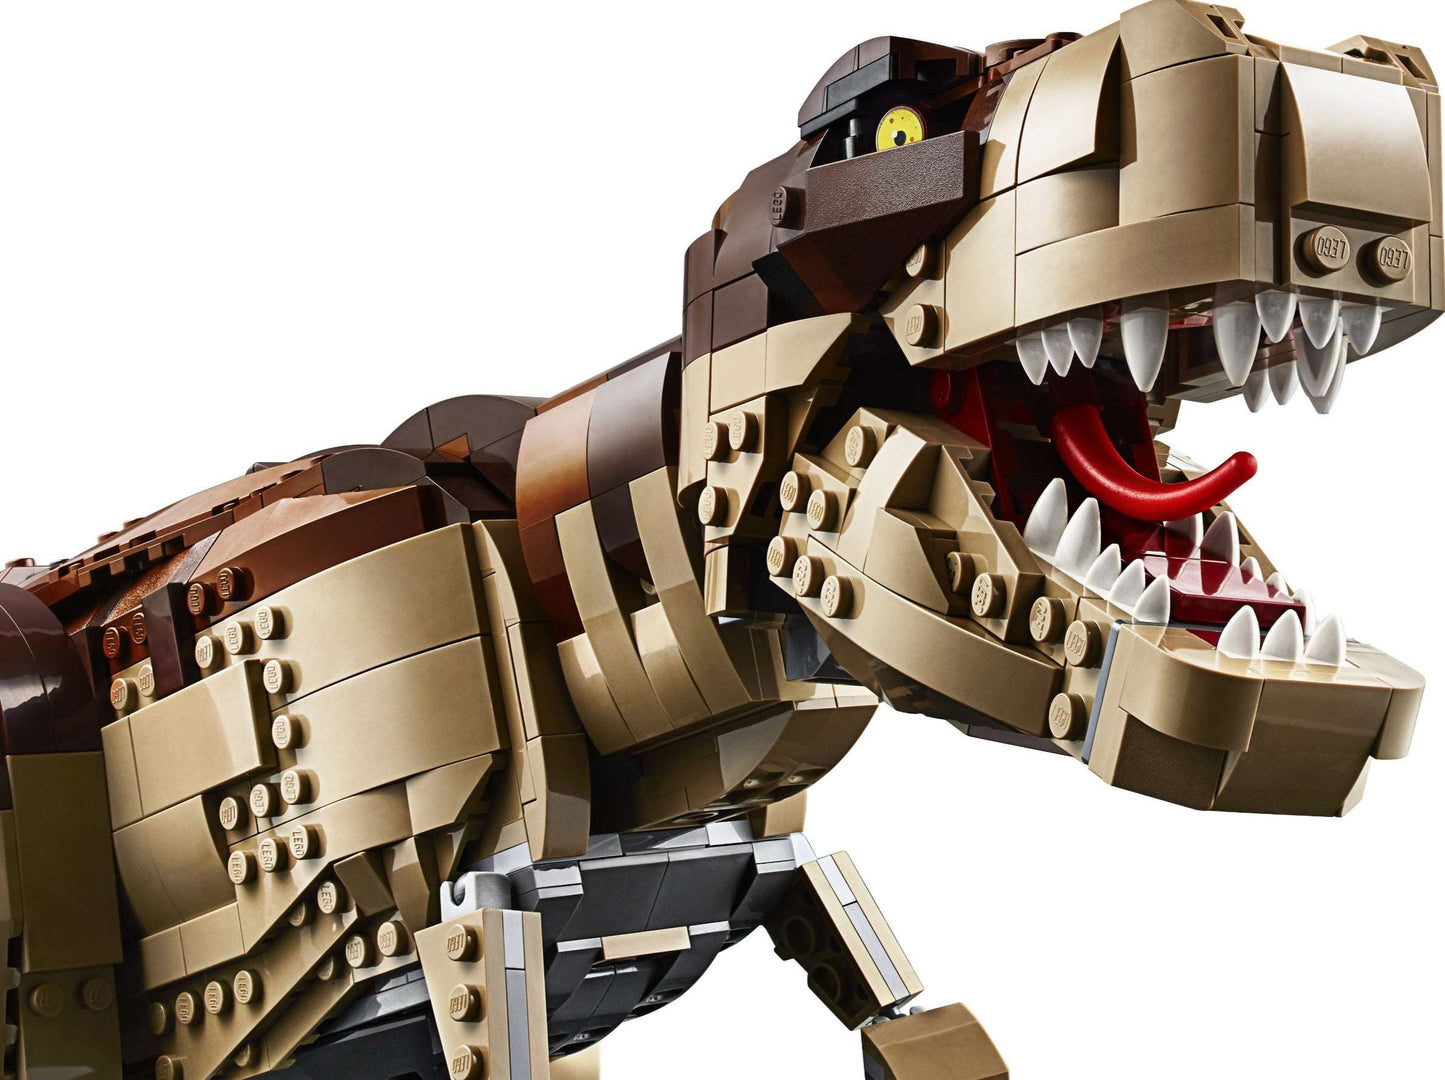 75936 : Jurassic Park: T. rex chaos - Brickset for You Huur Lego Kortrijk (West-Vlaanderen)